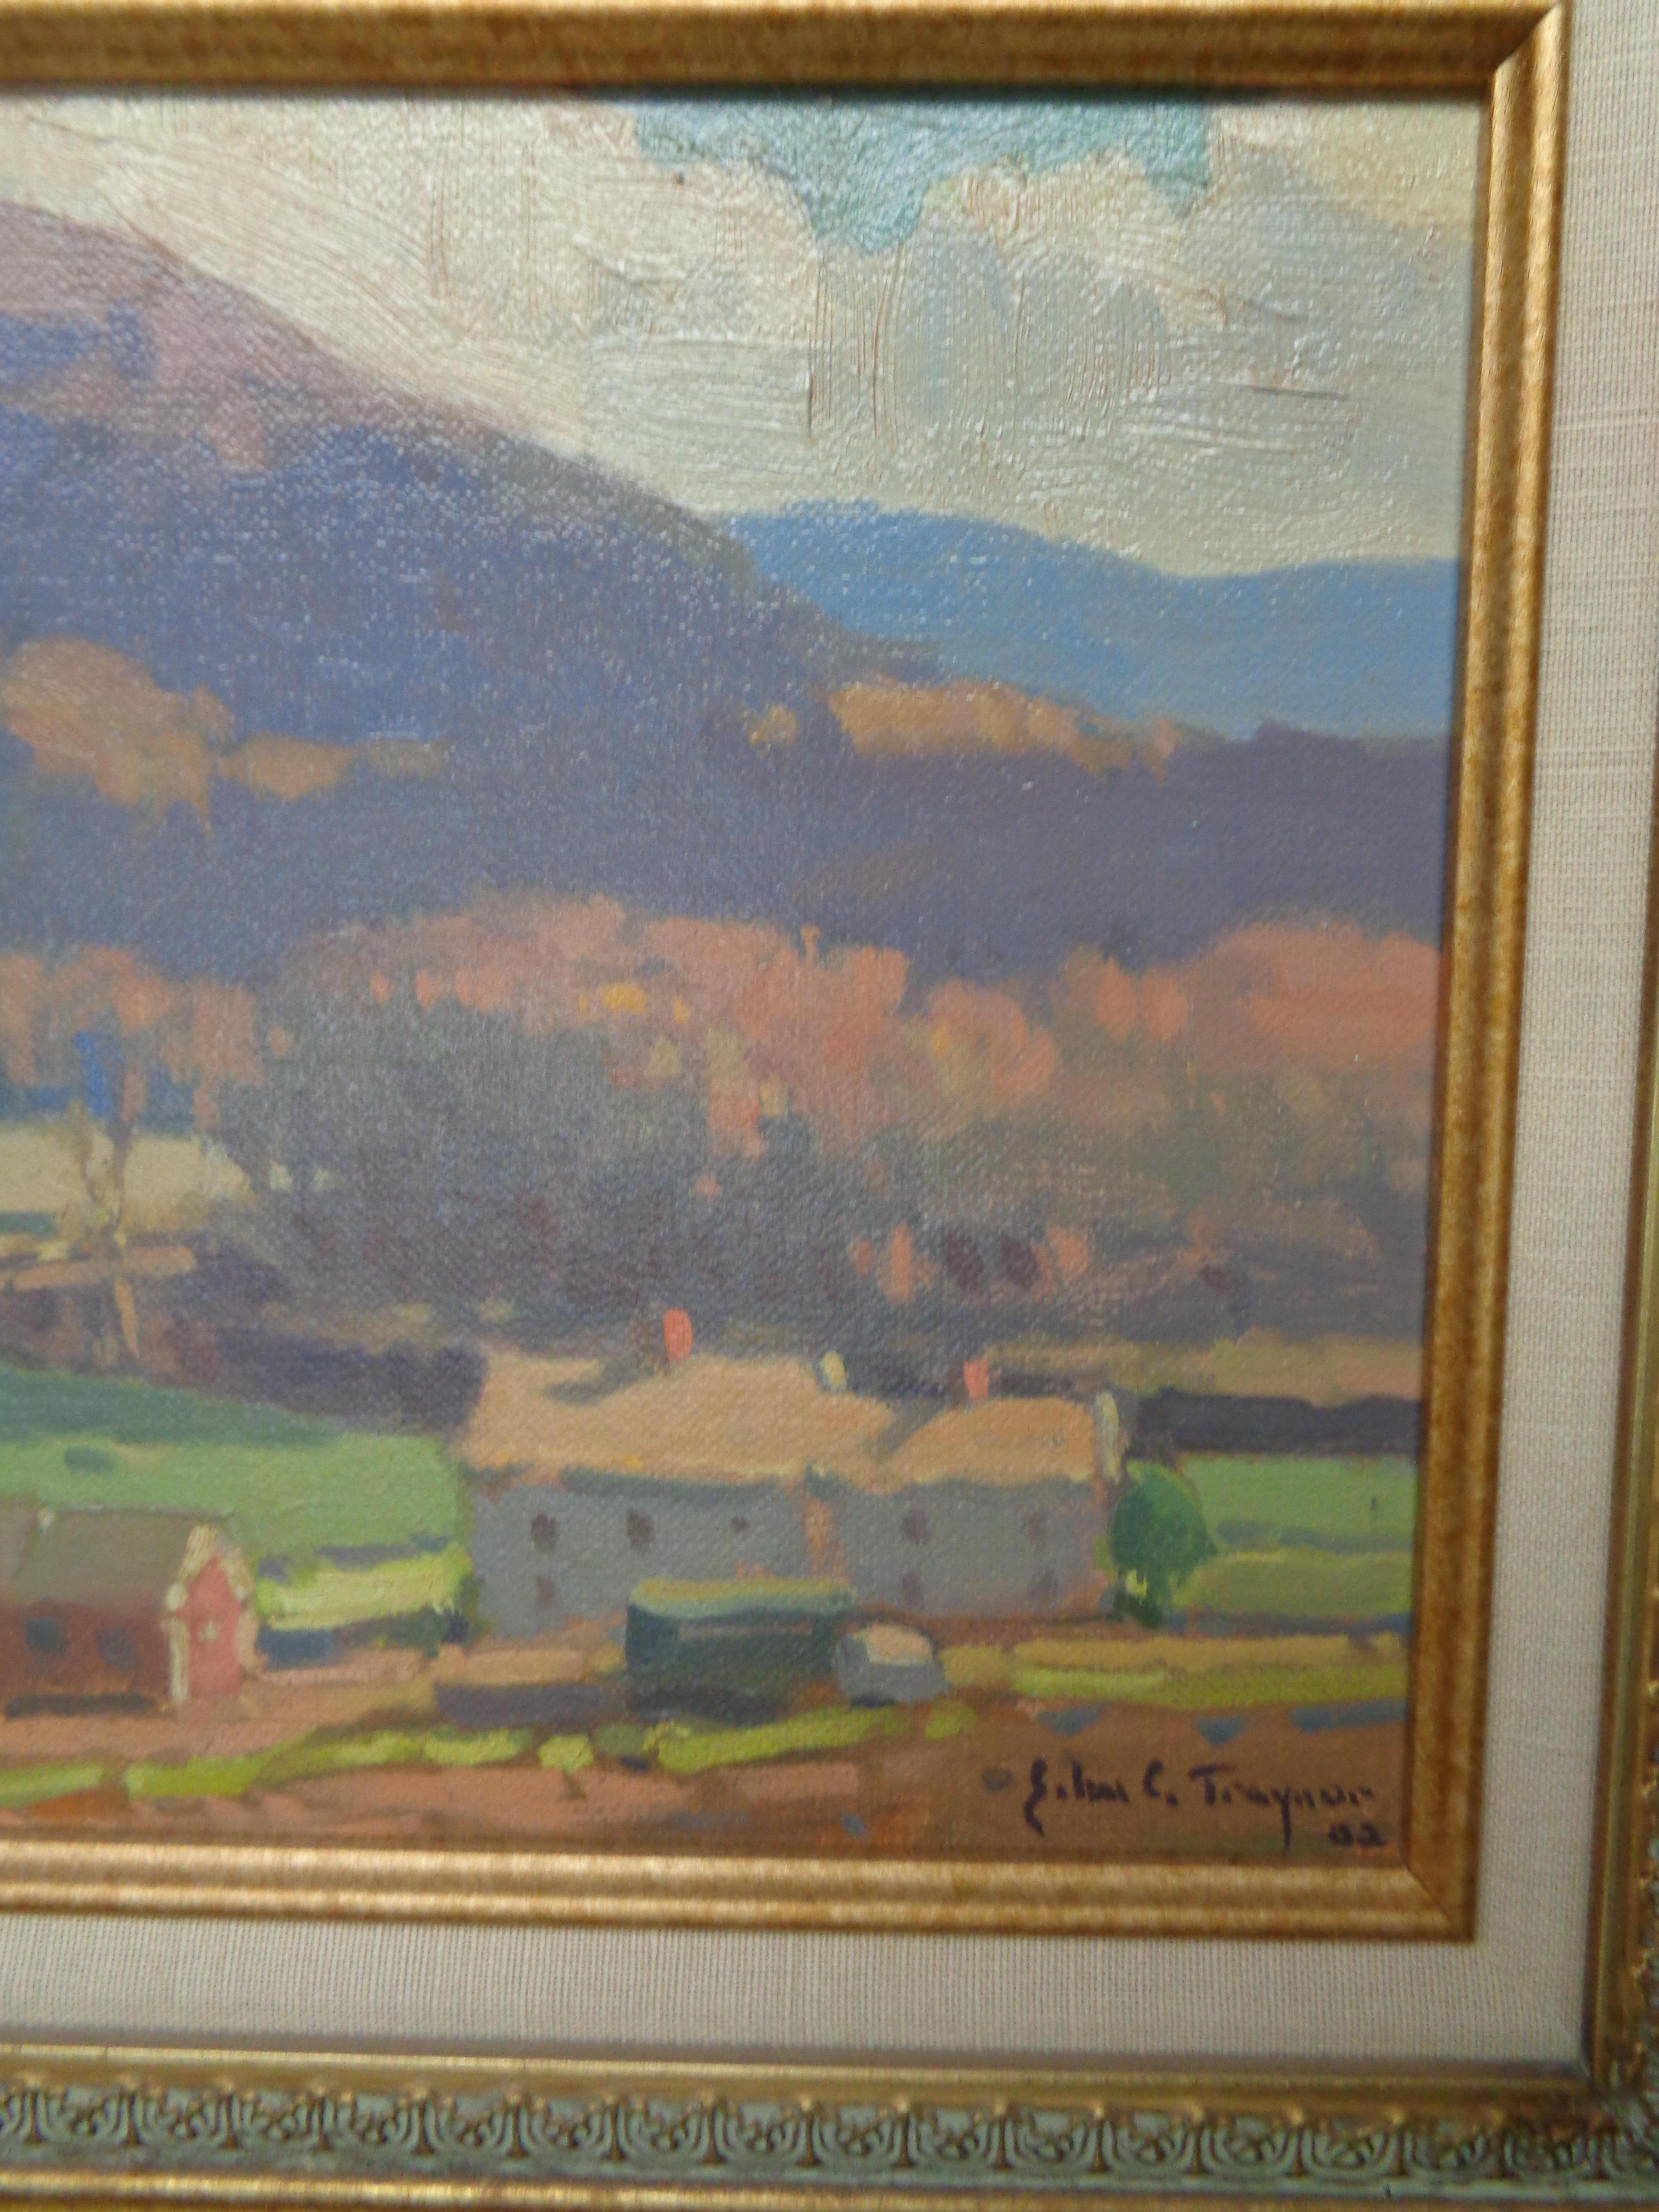 Landscape Farm Oil painting John C Traynor Salmagundi Club Auction NYC For Sale 3